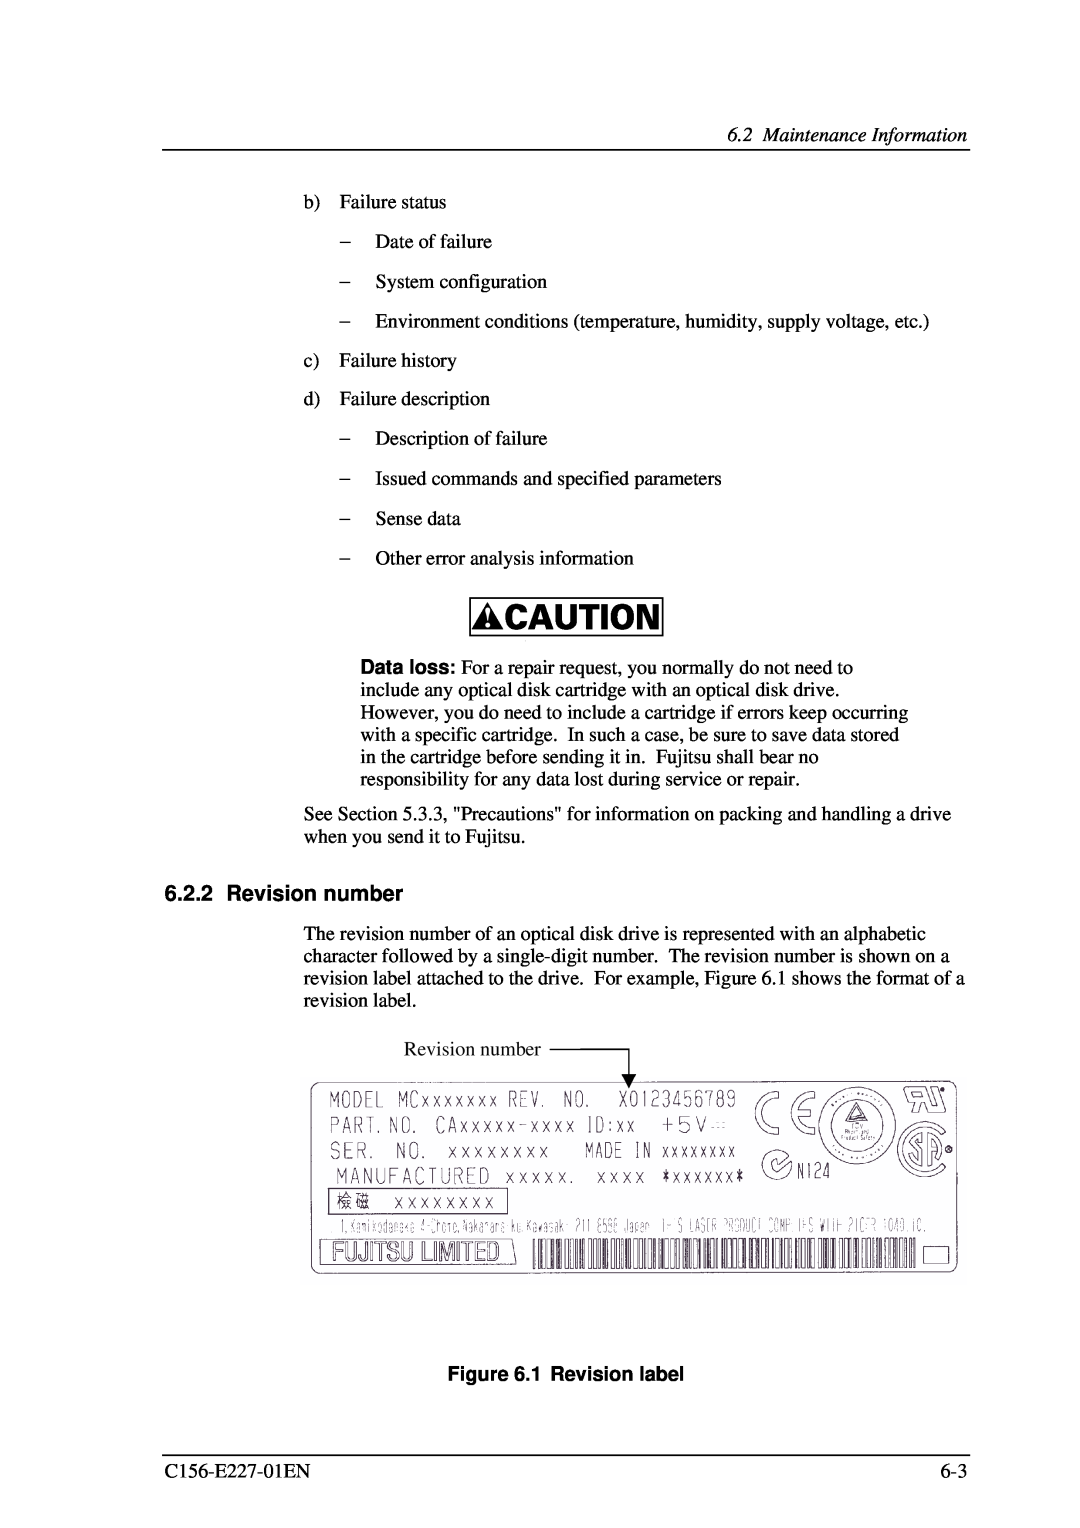 Fujitsu MCM3130AP, MCM3064AP manual Revision number, Maintenance Information, 1 Revision label 